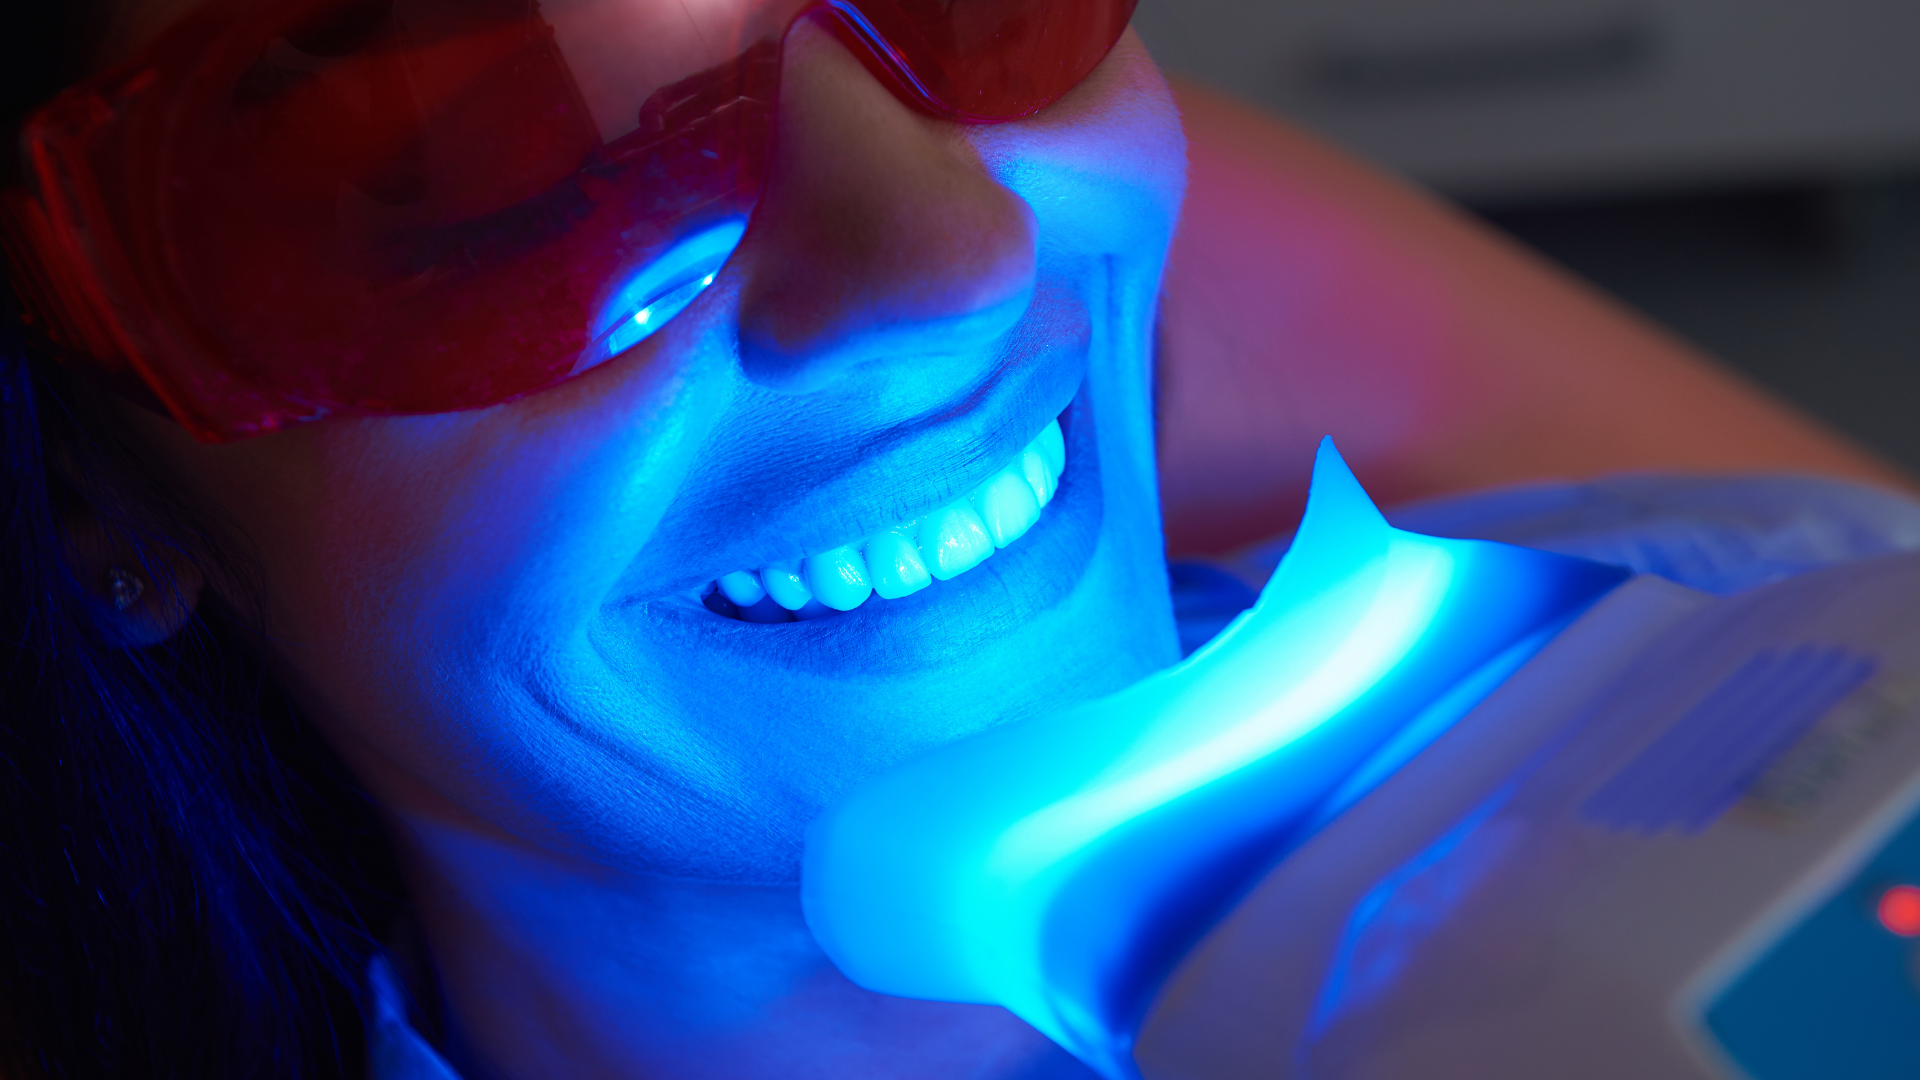 blanqueamiento dental laser con zoom